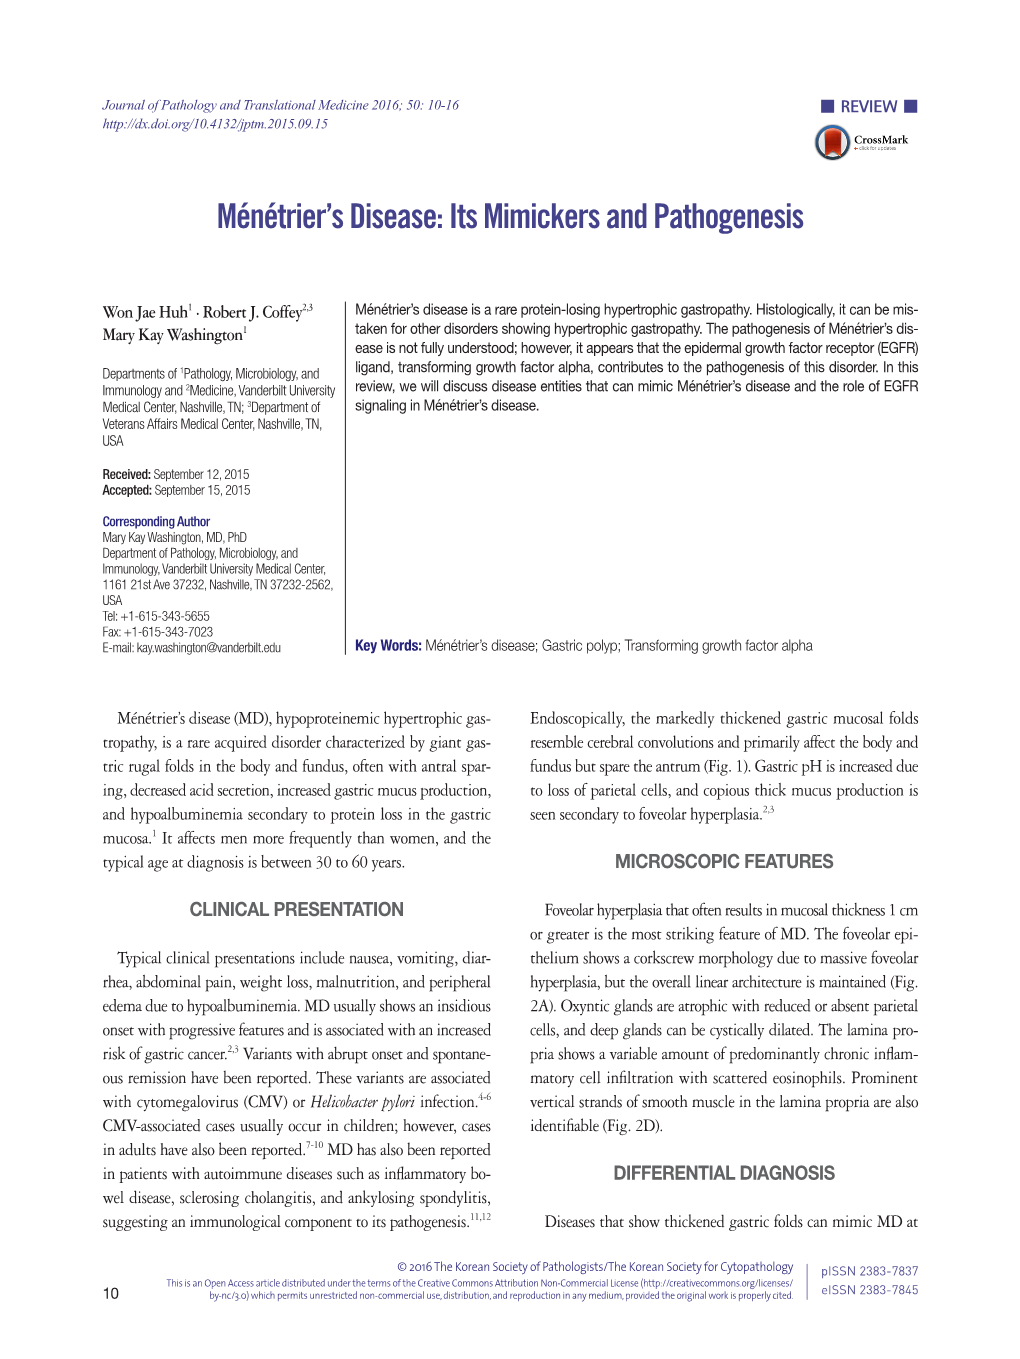 Ménétrier's Disease: Its Mimickers and Pathogenesis